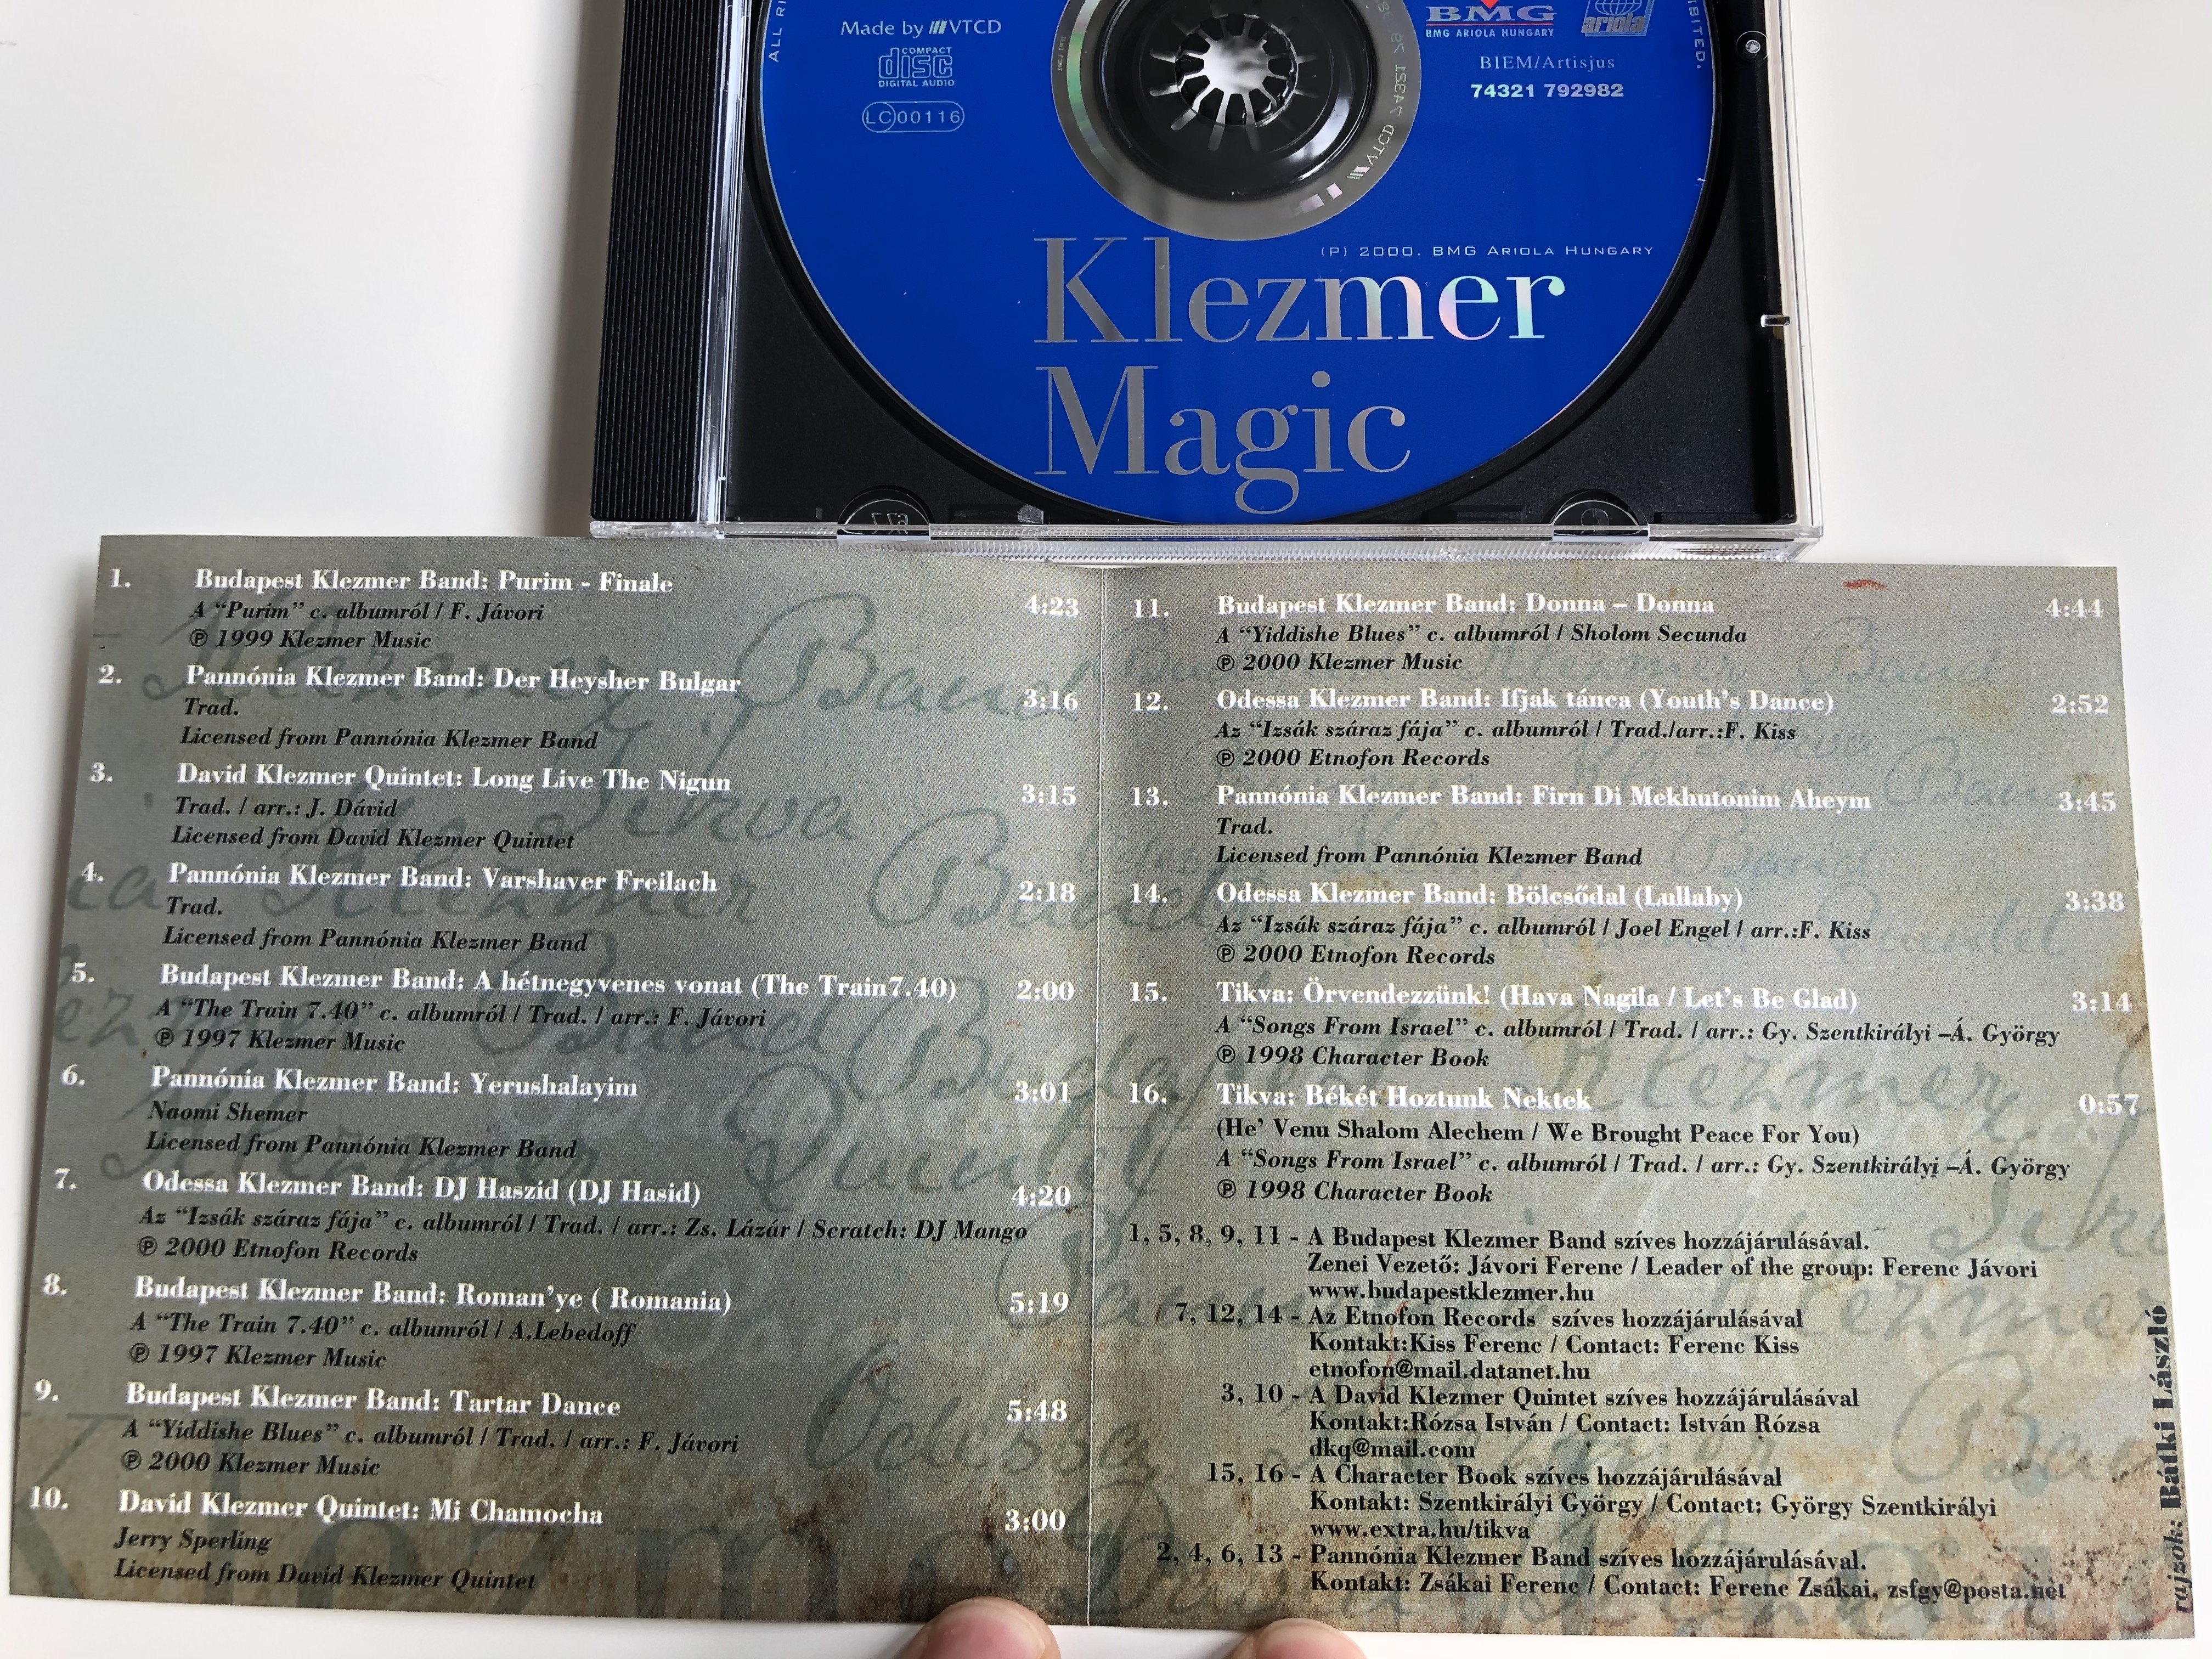 klezmer-magic-a-collection-of-the-best-klezmer-music-from-hungary-budapest-klezmer-band-pannonia-klezmer-band-odessa-klezmer-band-david-klezmer-quintet-bmg-ariola-hungary-audio-cd-2000-.jpg